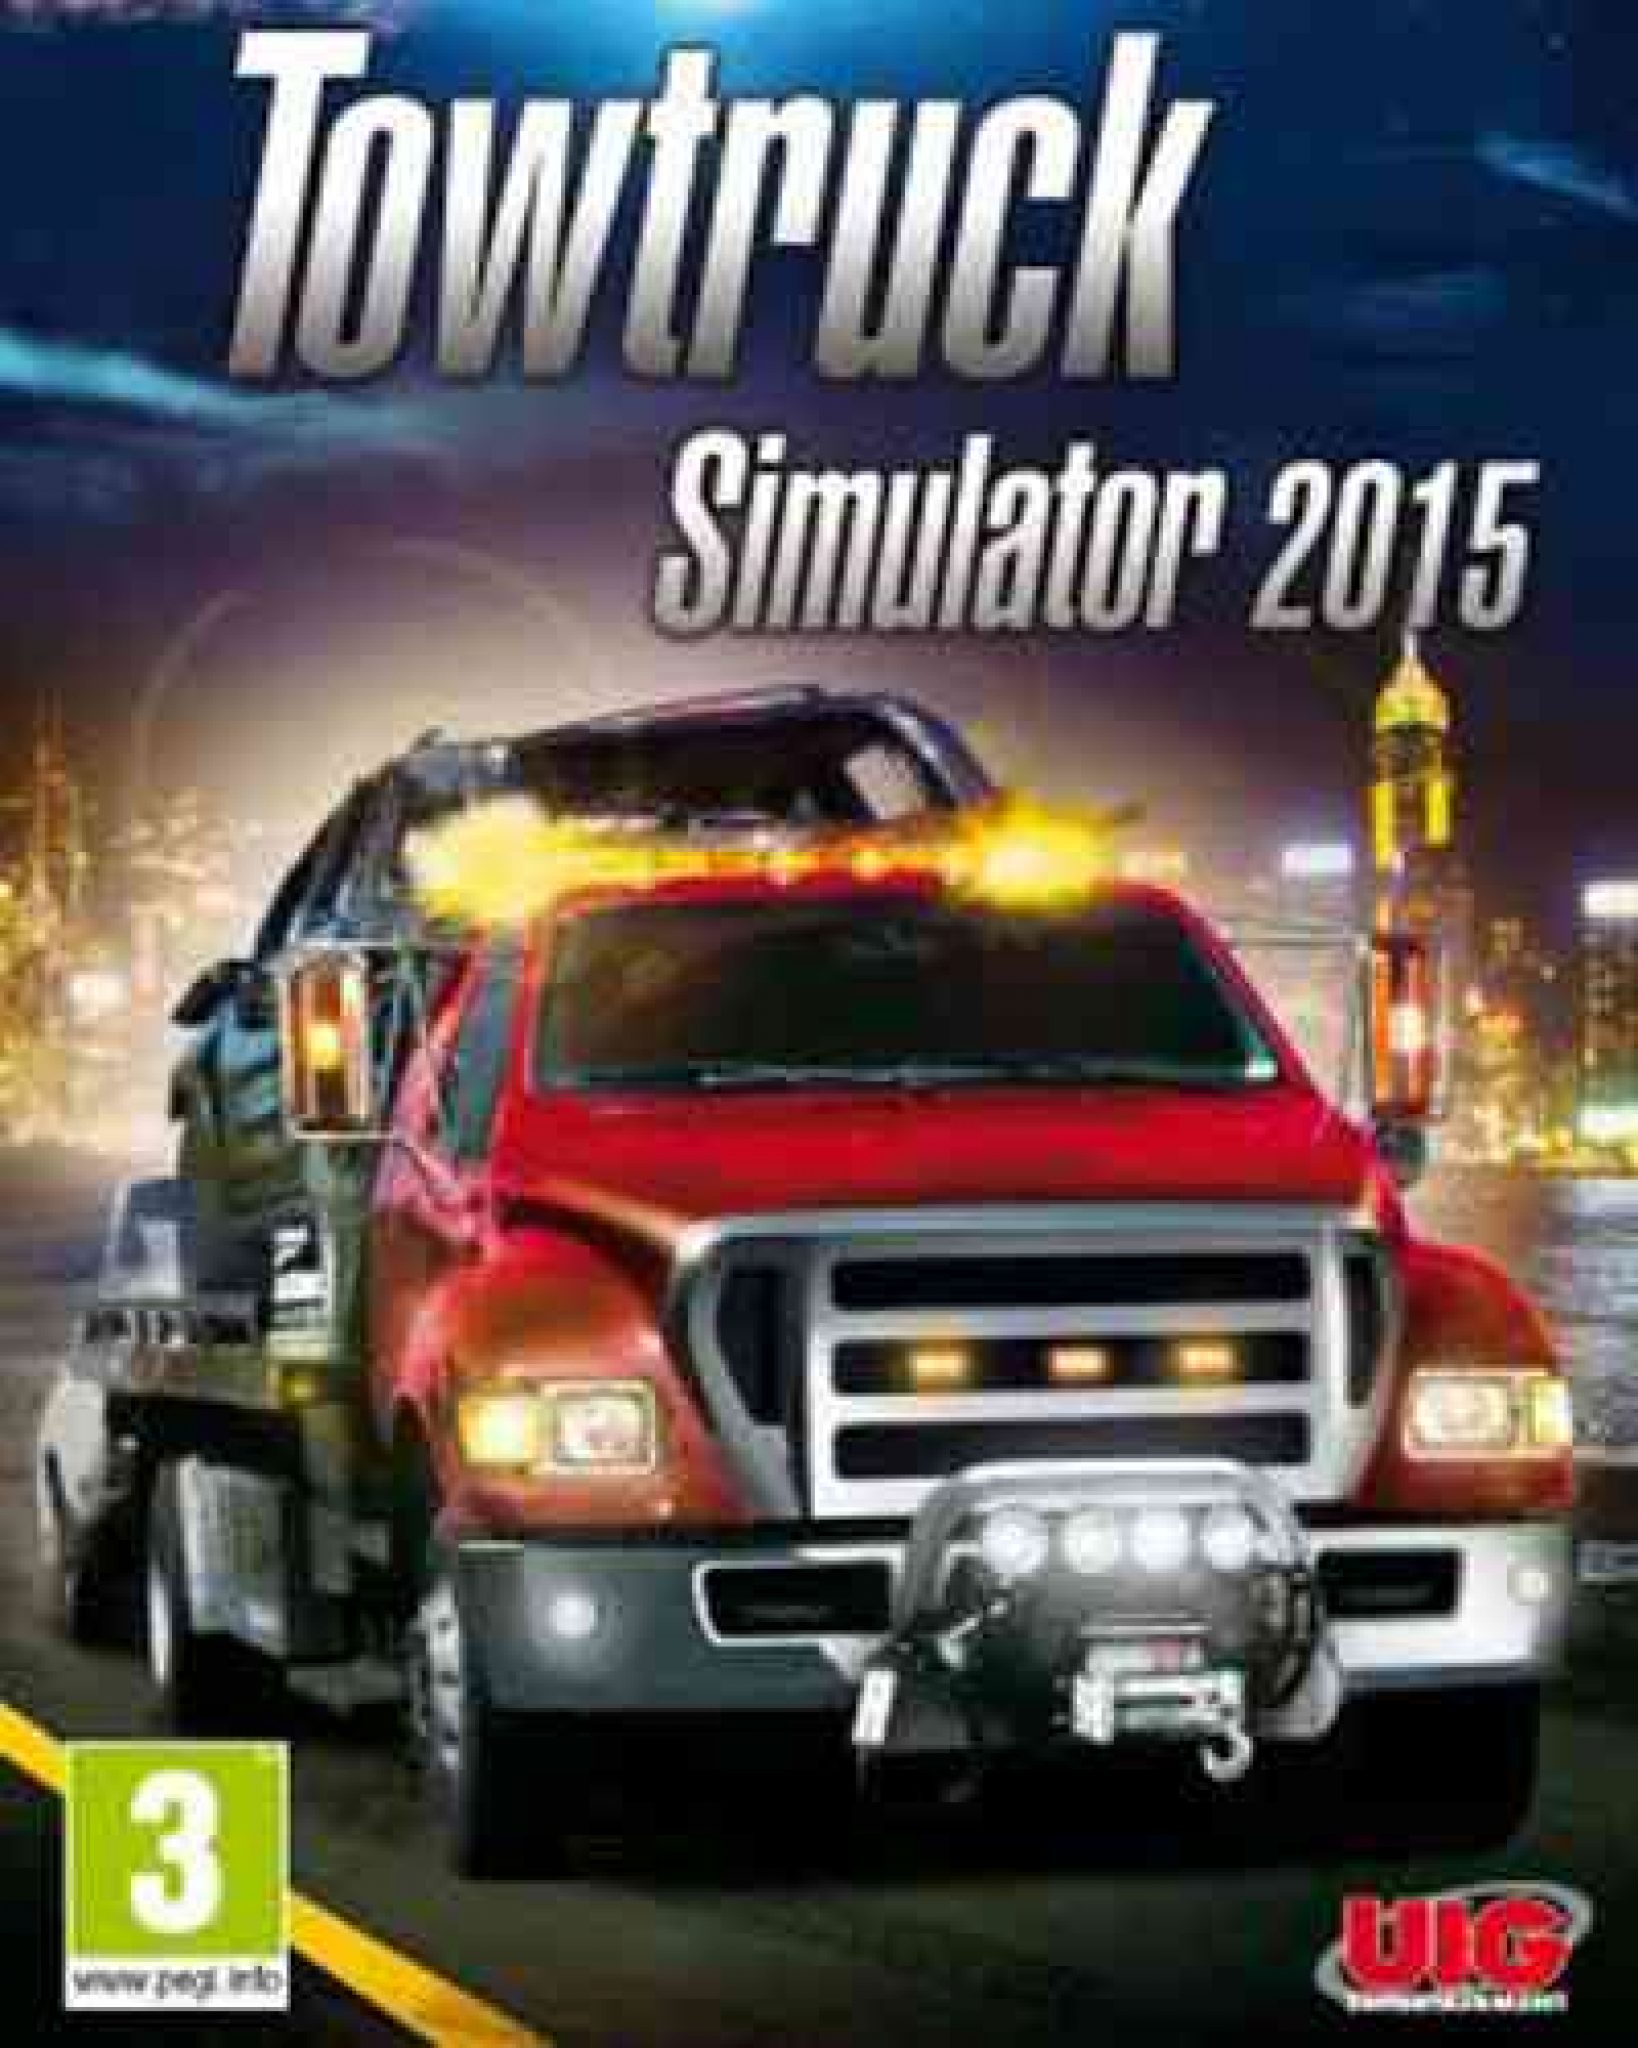 full free simulation game downloads